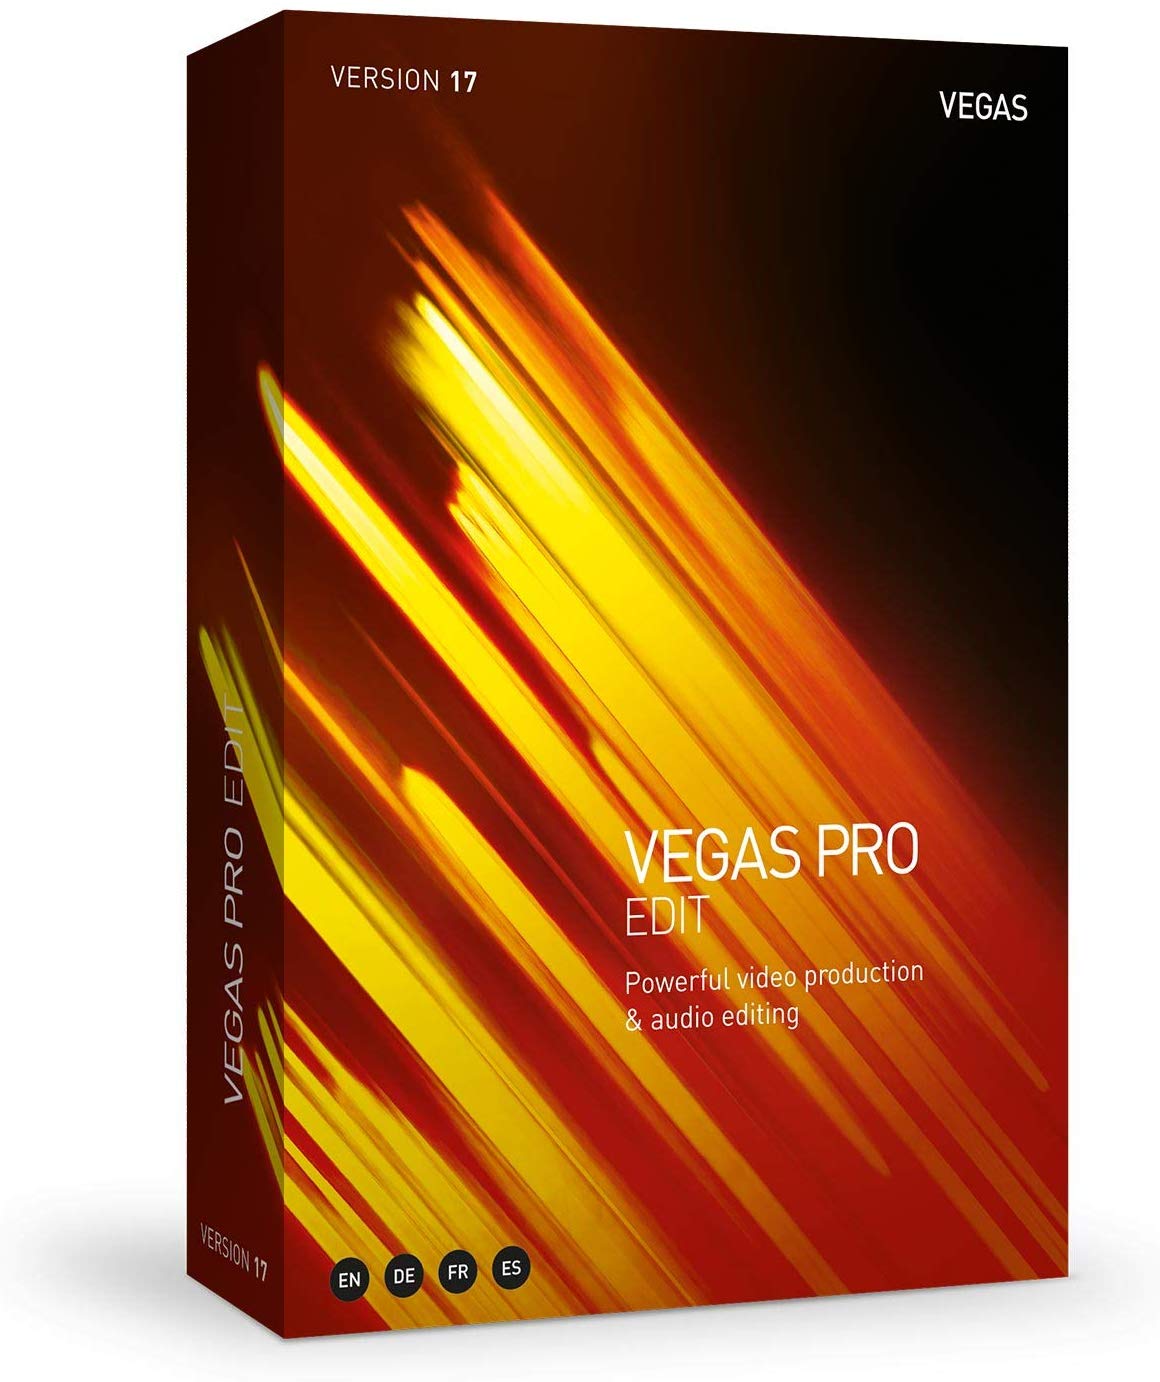 VEGAS Pro 17 Edit - Professional Video and Audio Editing.